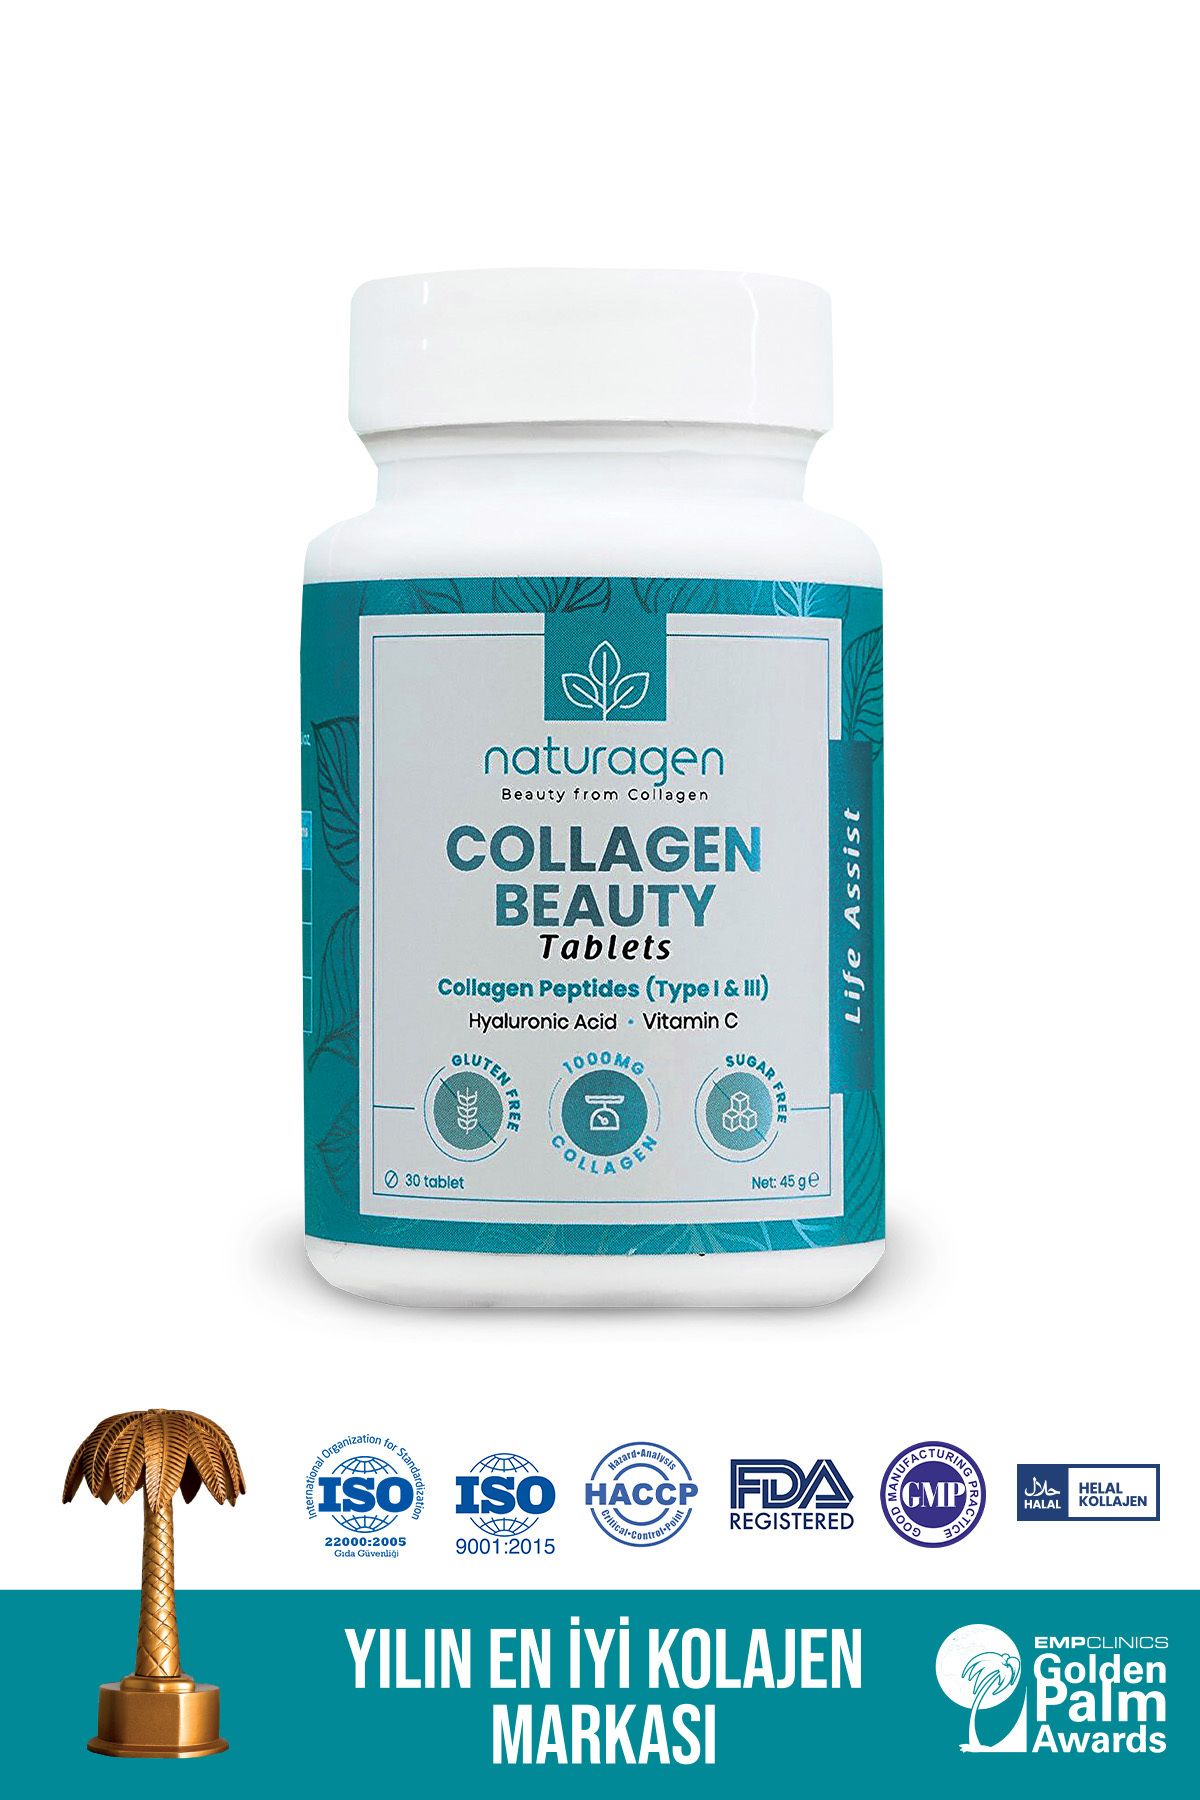 Naturagen Kolajen 30 Tablet Hidrolize Collagen Type (tip-1 & Tip-3 Sığır Kolajen,hyaluronic Acid & Vitamin C)